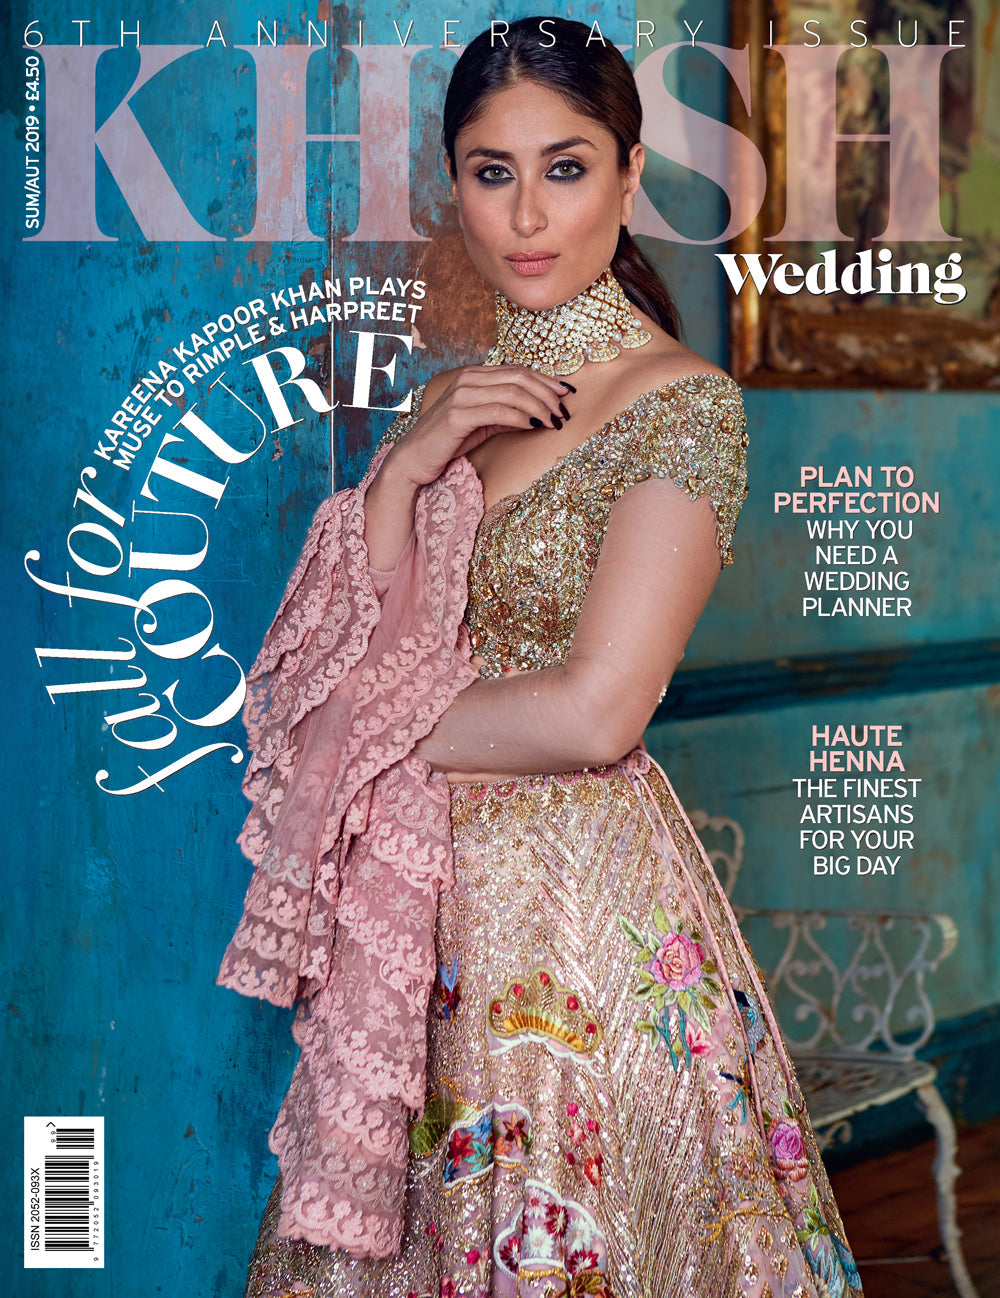 Kundan choker necklace as seen on Kareena Kapoor Khan in Khush Magazine. Bollywood jewellery UK